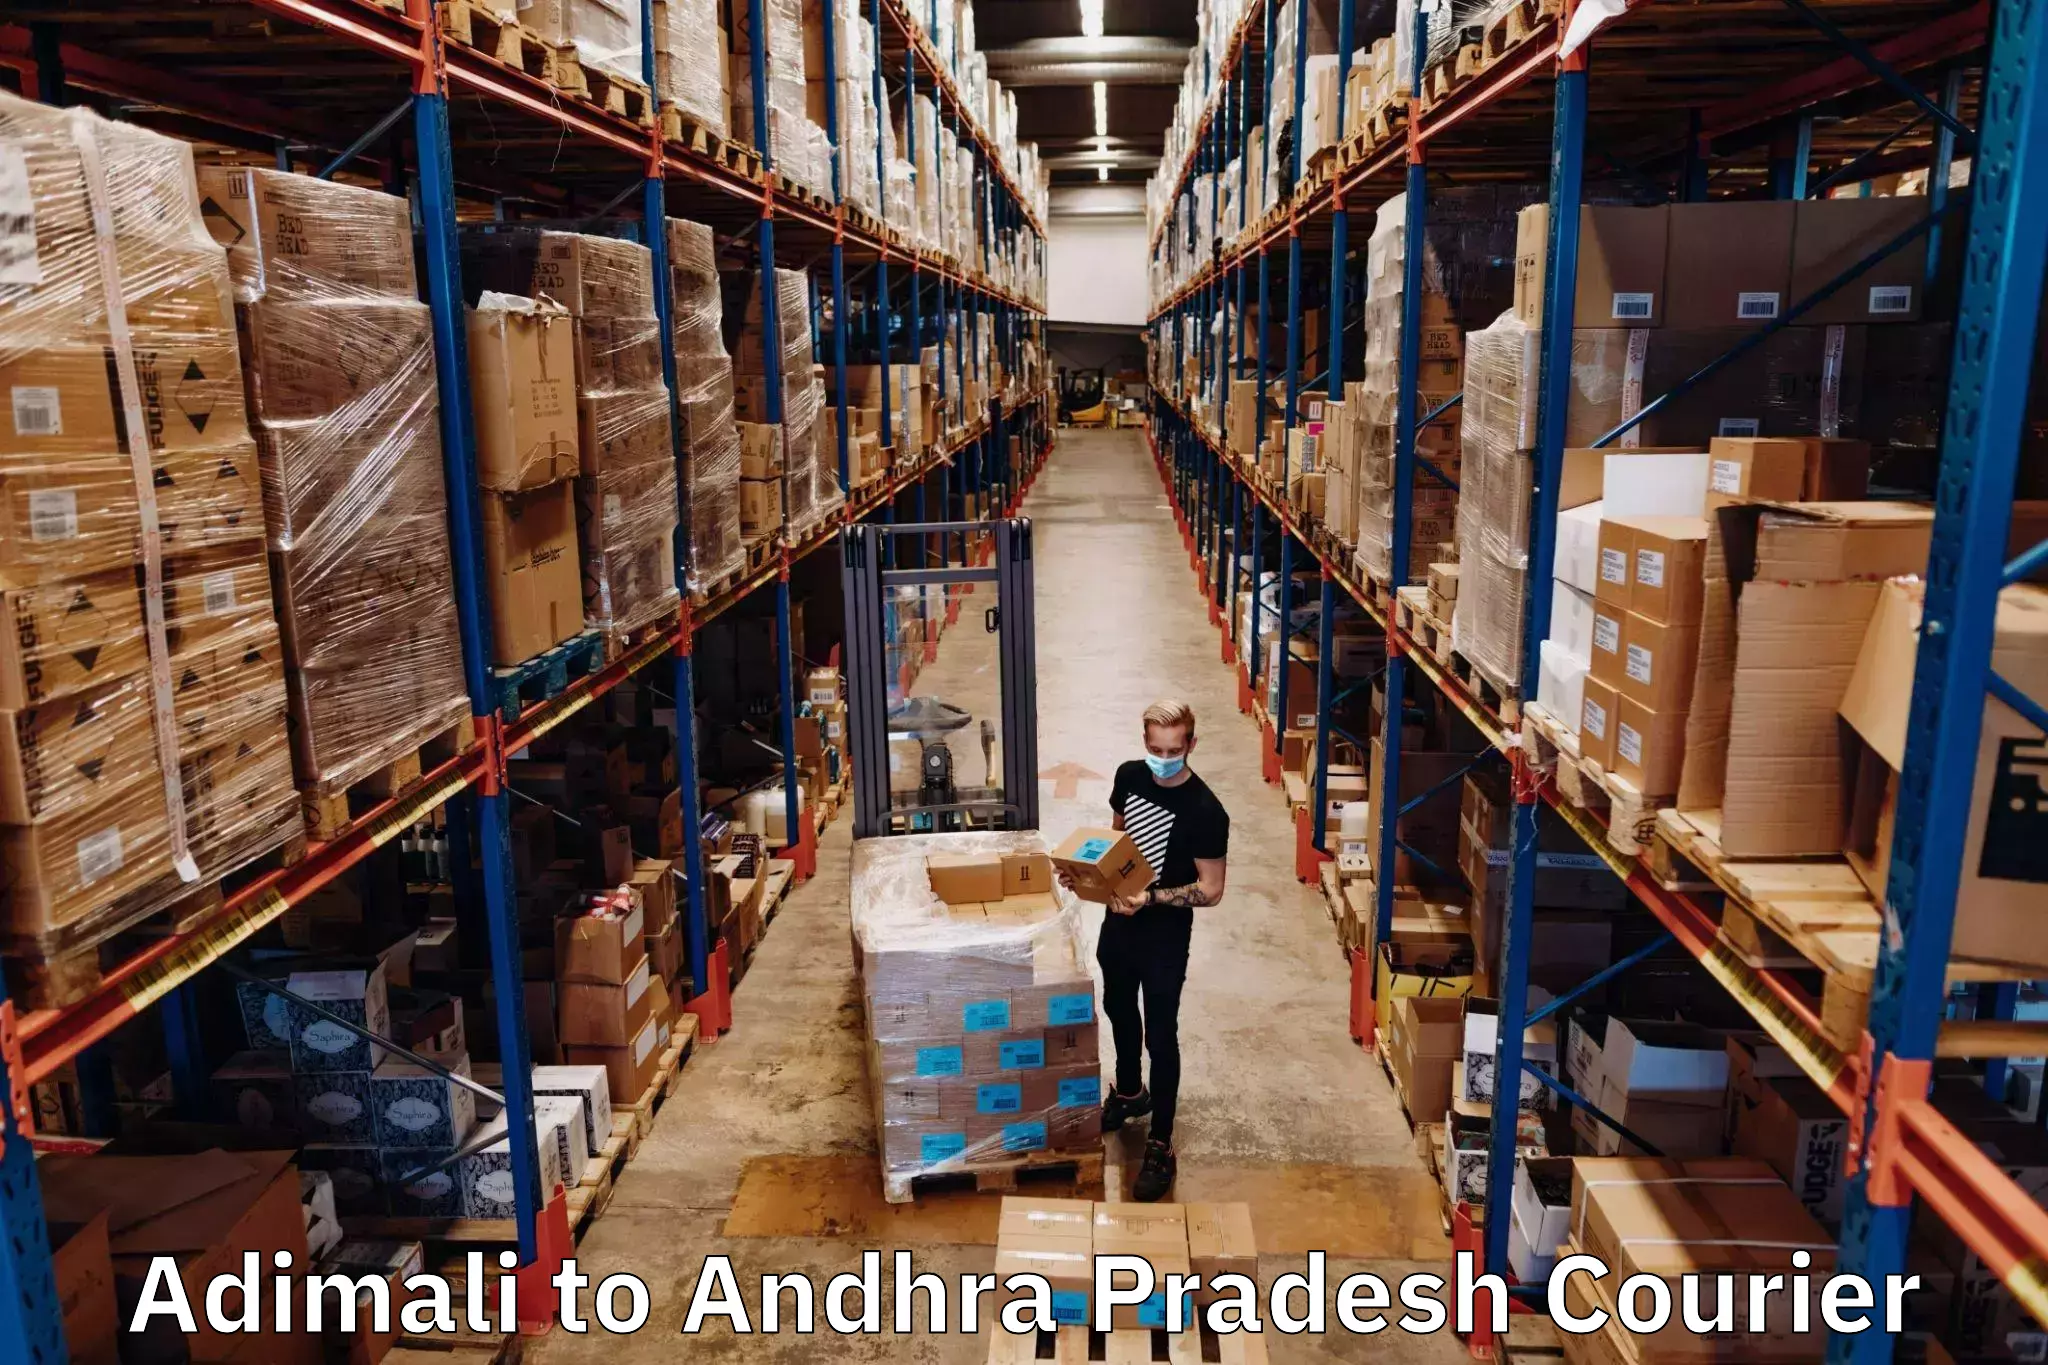 Global shipping networks Adimali to Andhra Pradesh